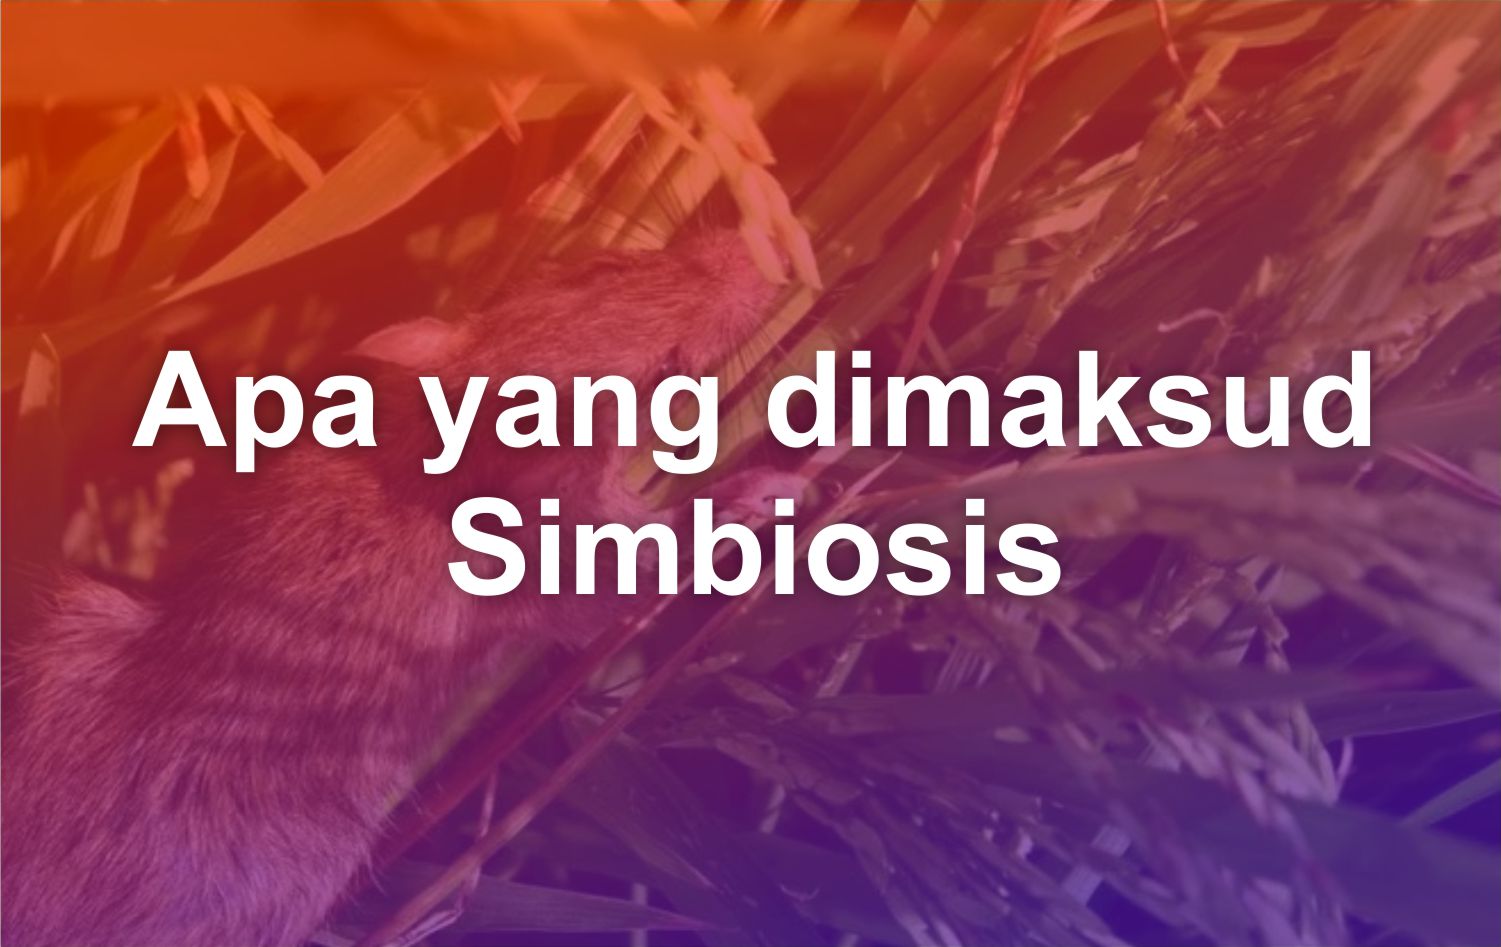 apa yang dimaksud dengan simbiosis